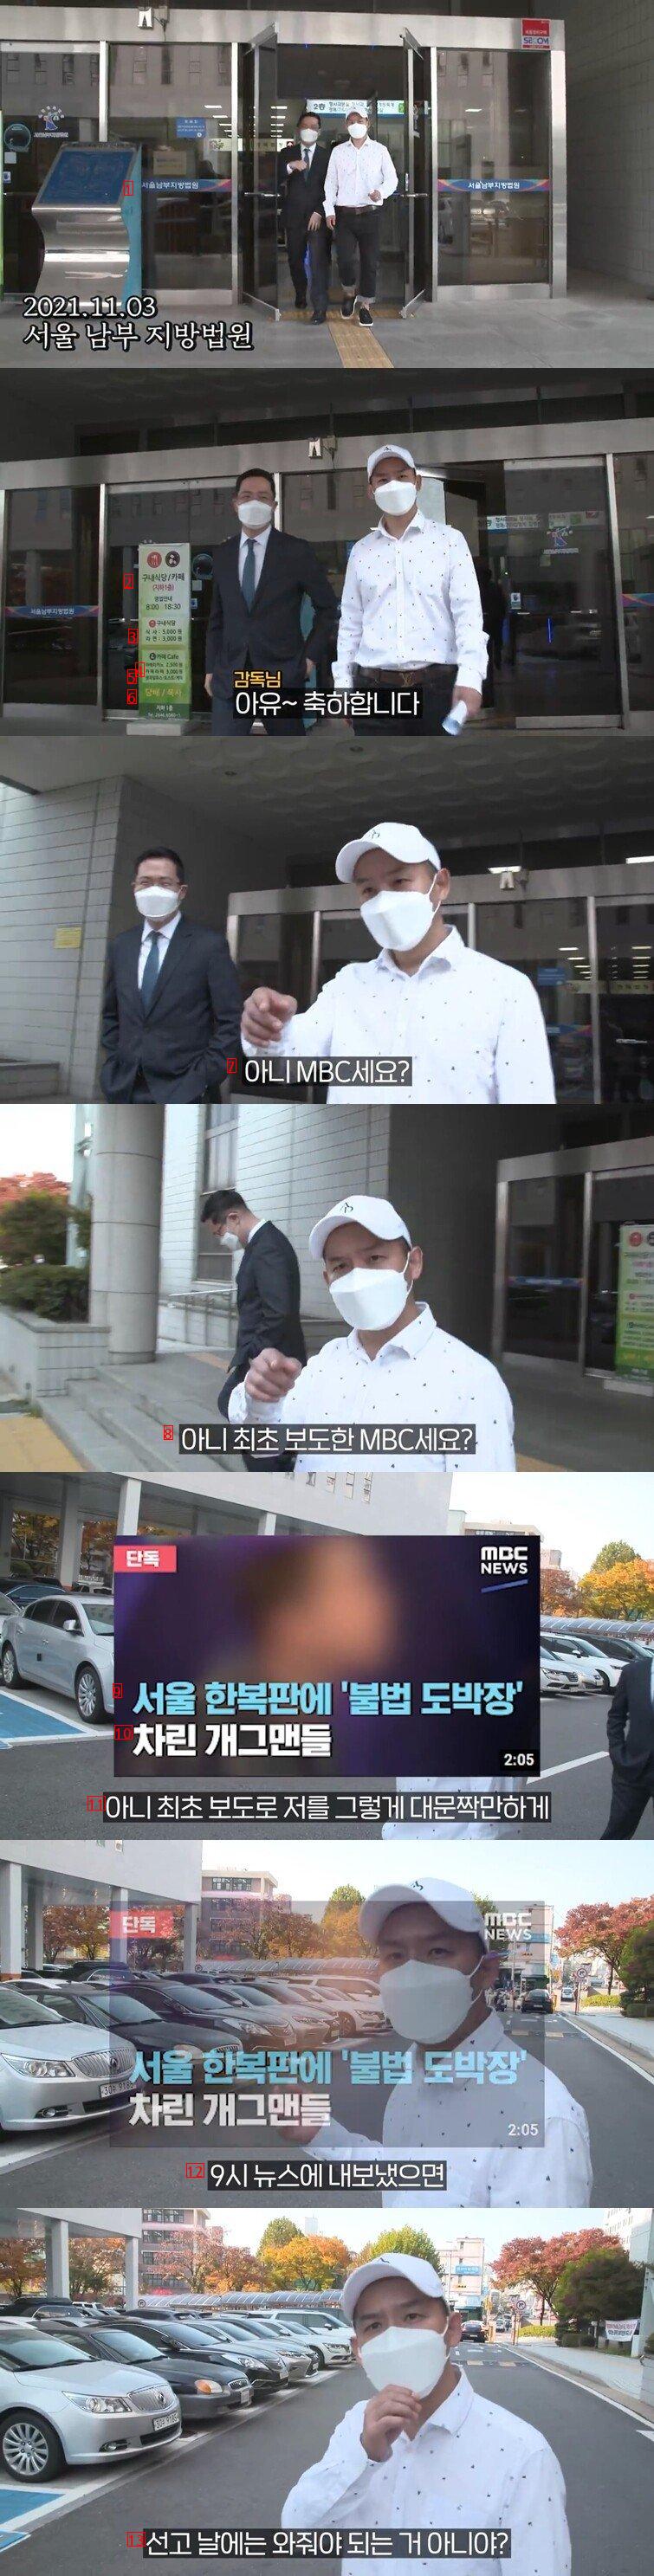 MBC가 안와서 서운한 개그맨...JPG